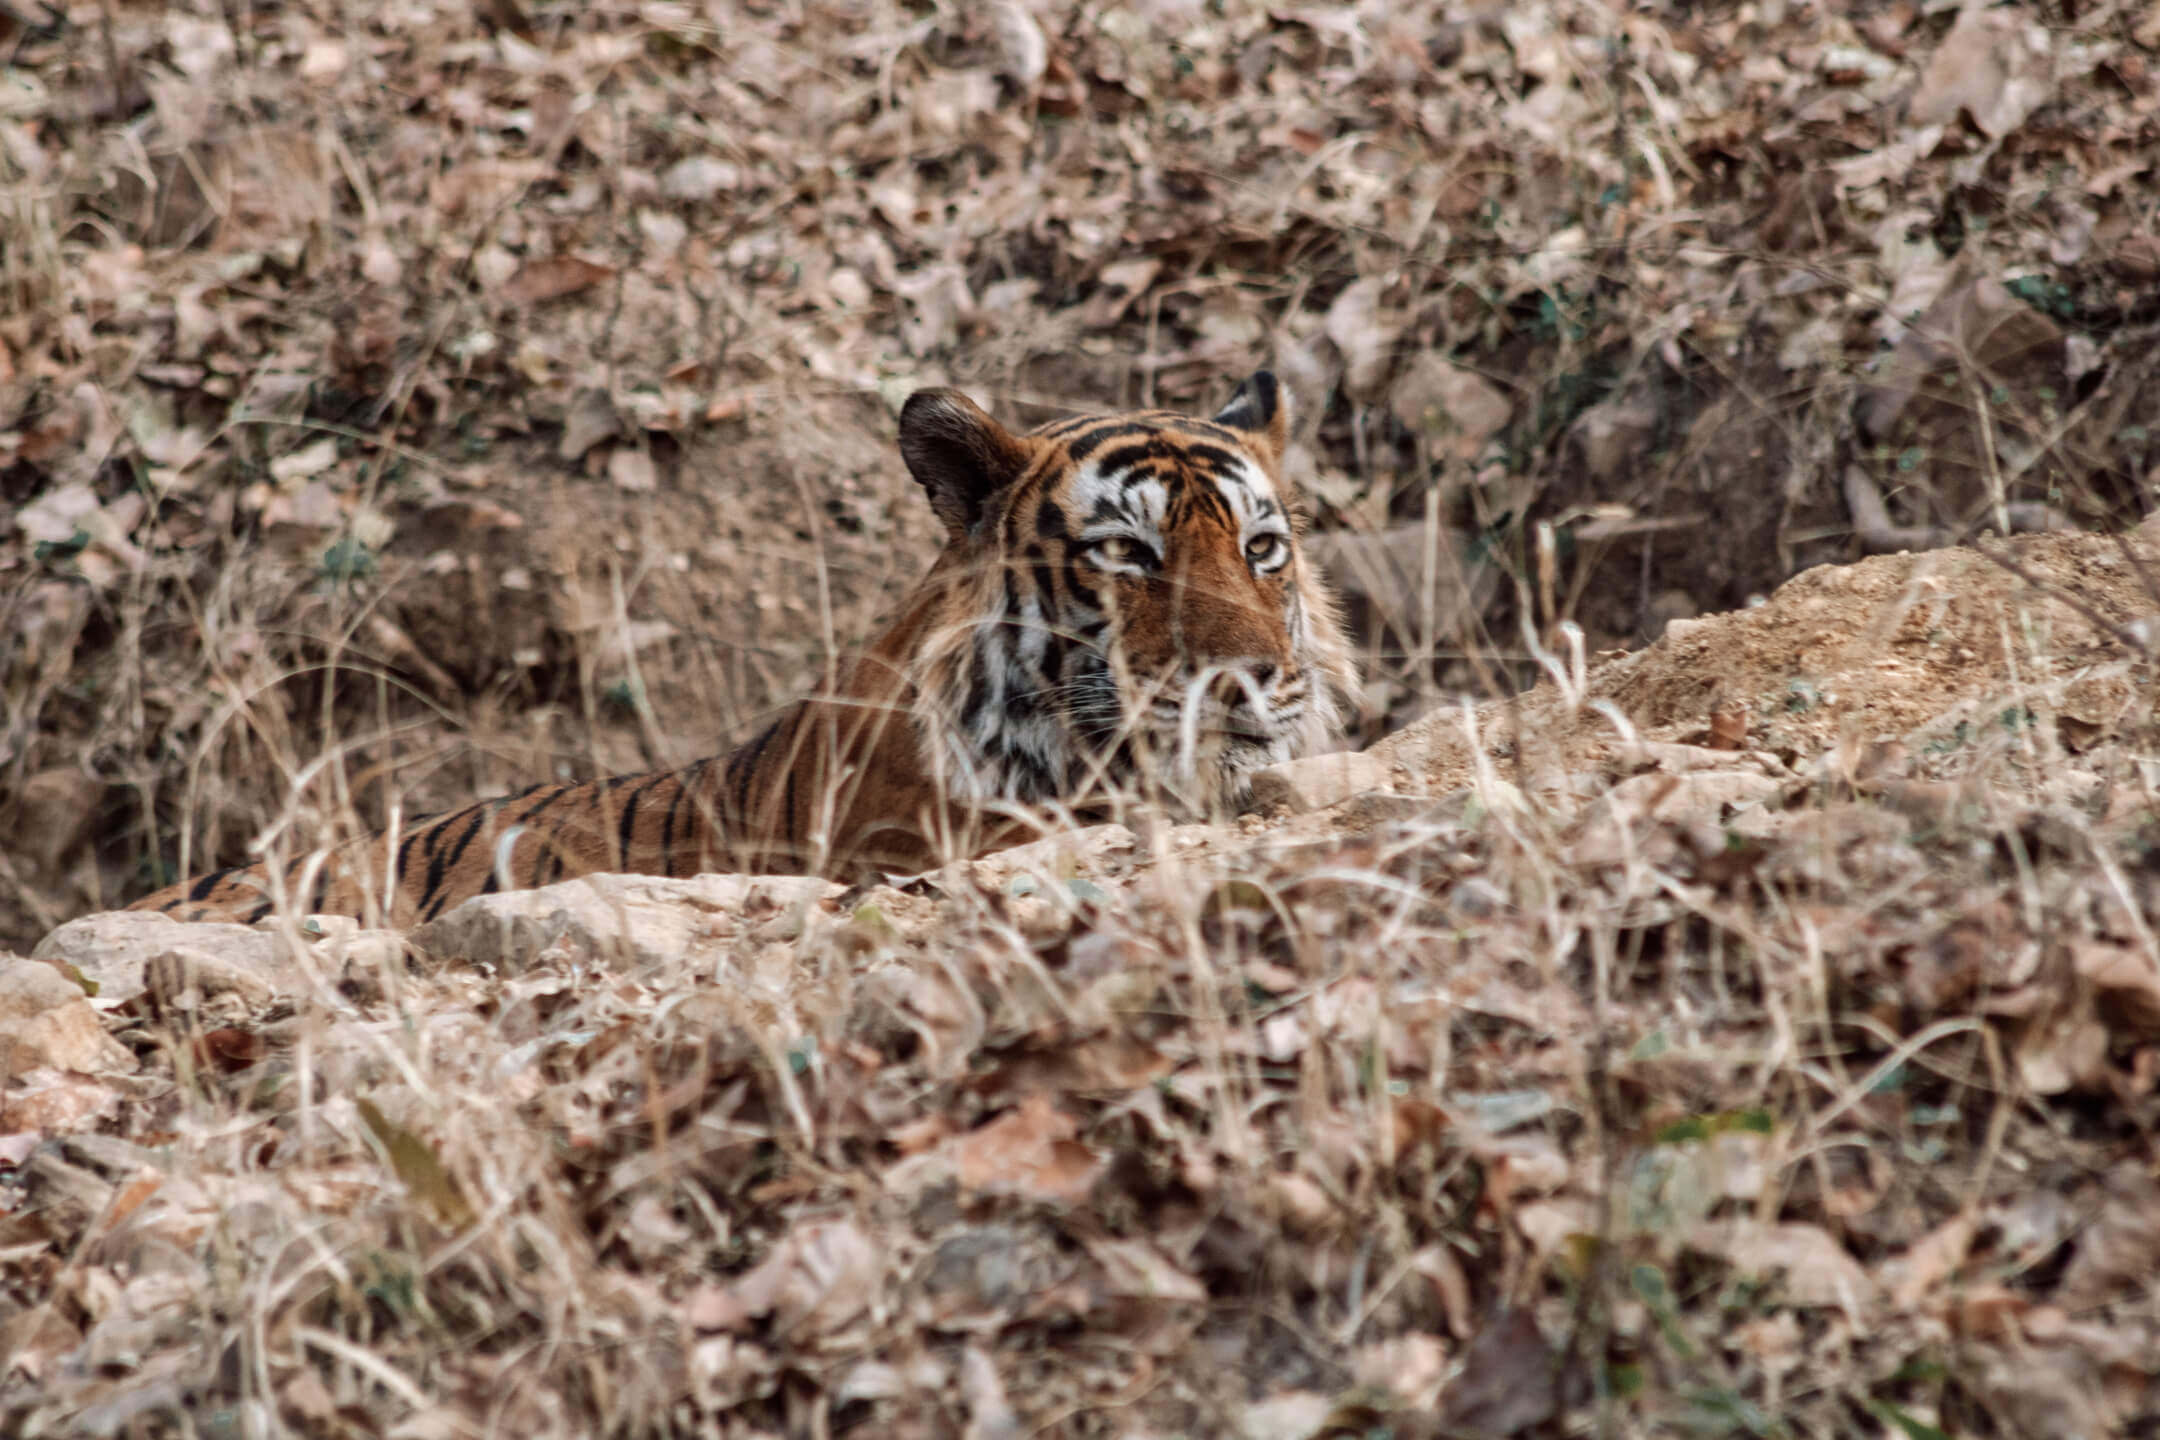 Tiger in Rantambore National Park - India